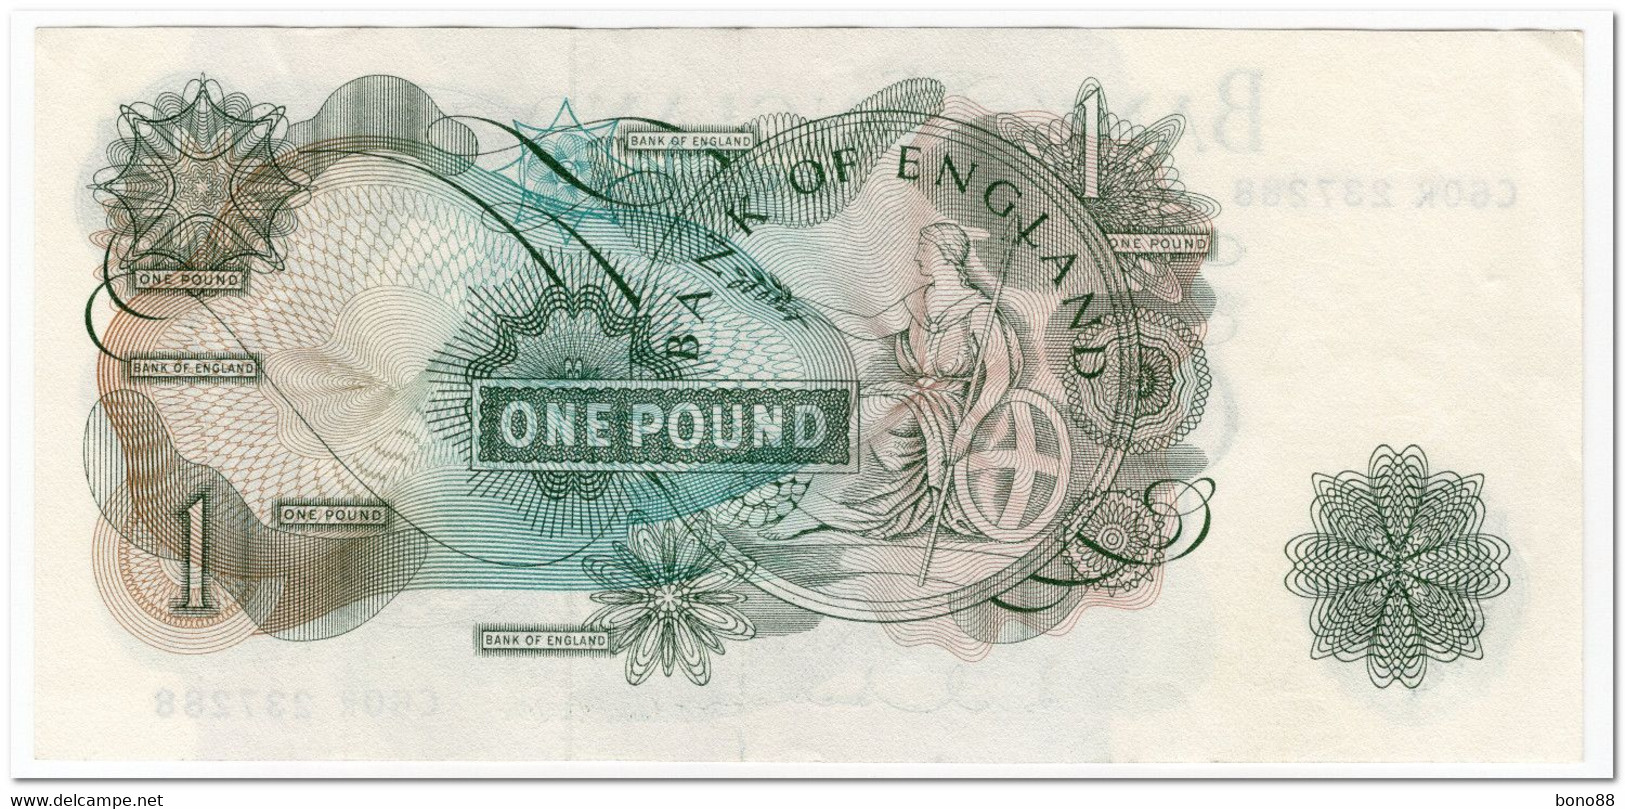 GREAT BRITAIN,BANK OF ENGLAND,1 POUND,1962-66,P.374c,VF-XF - 1 Pound